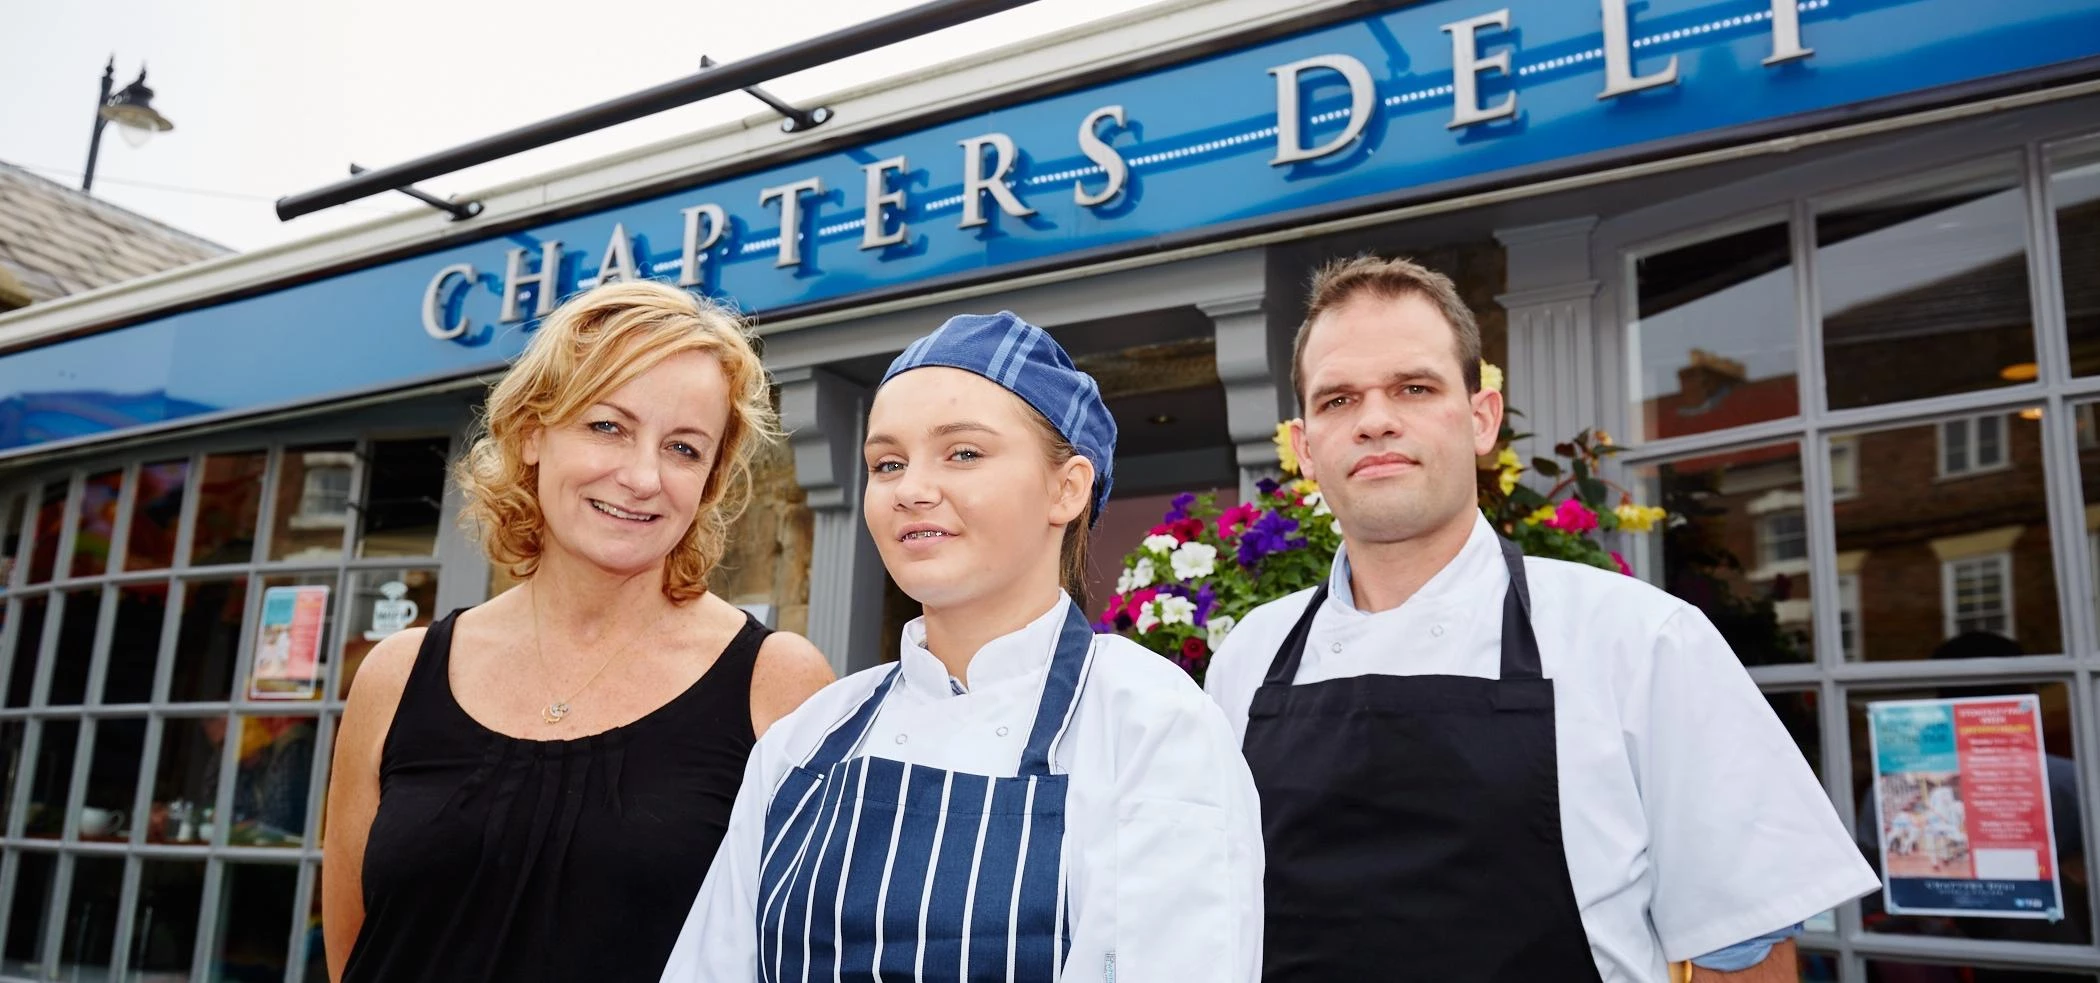 Jane Ablett (owner of Chapter’s Deli), Katie Stevens (apprentice chef at Chapter’s Deli) and Dan Arm